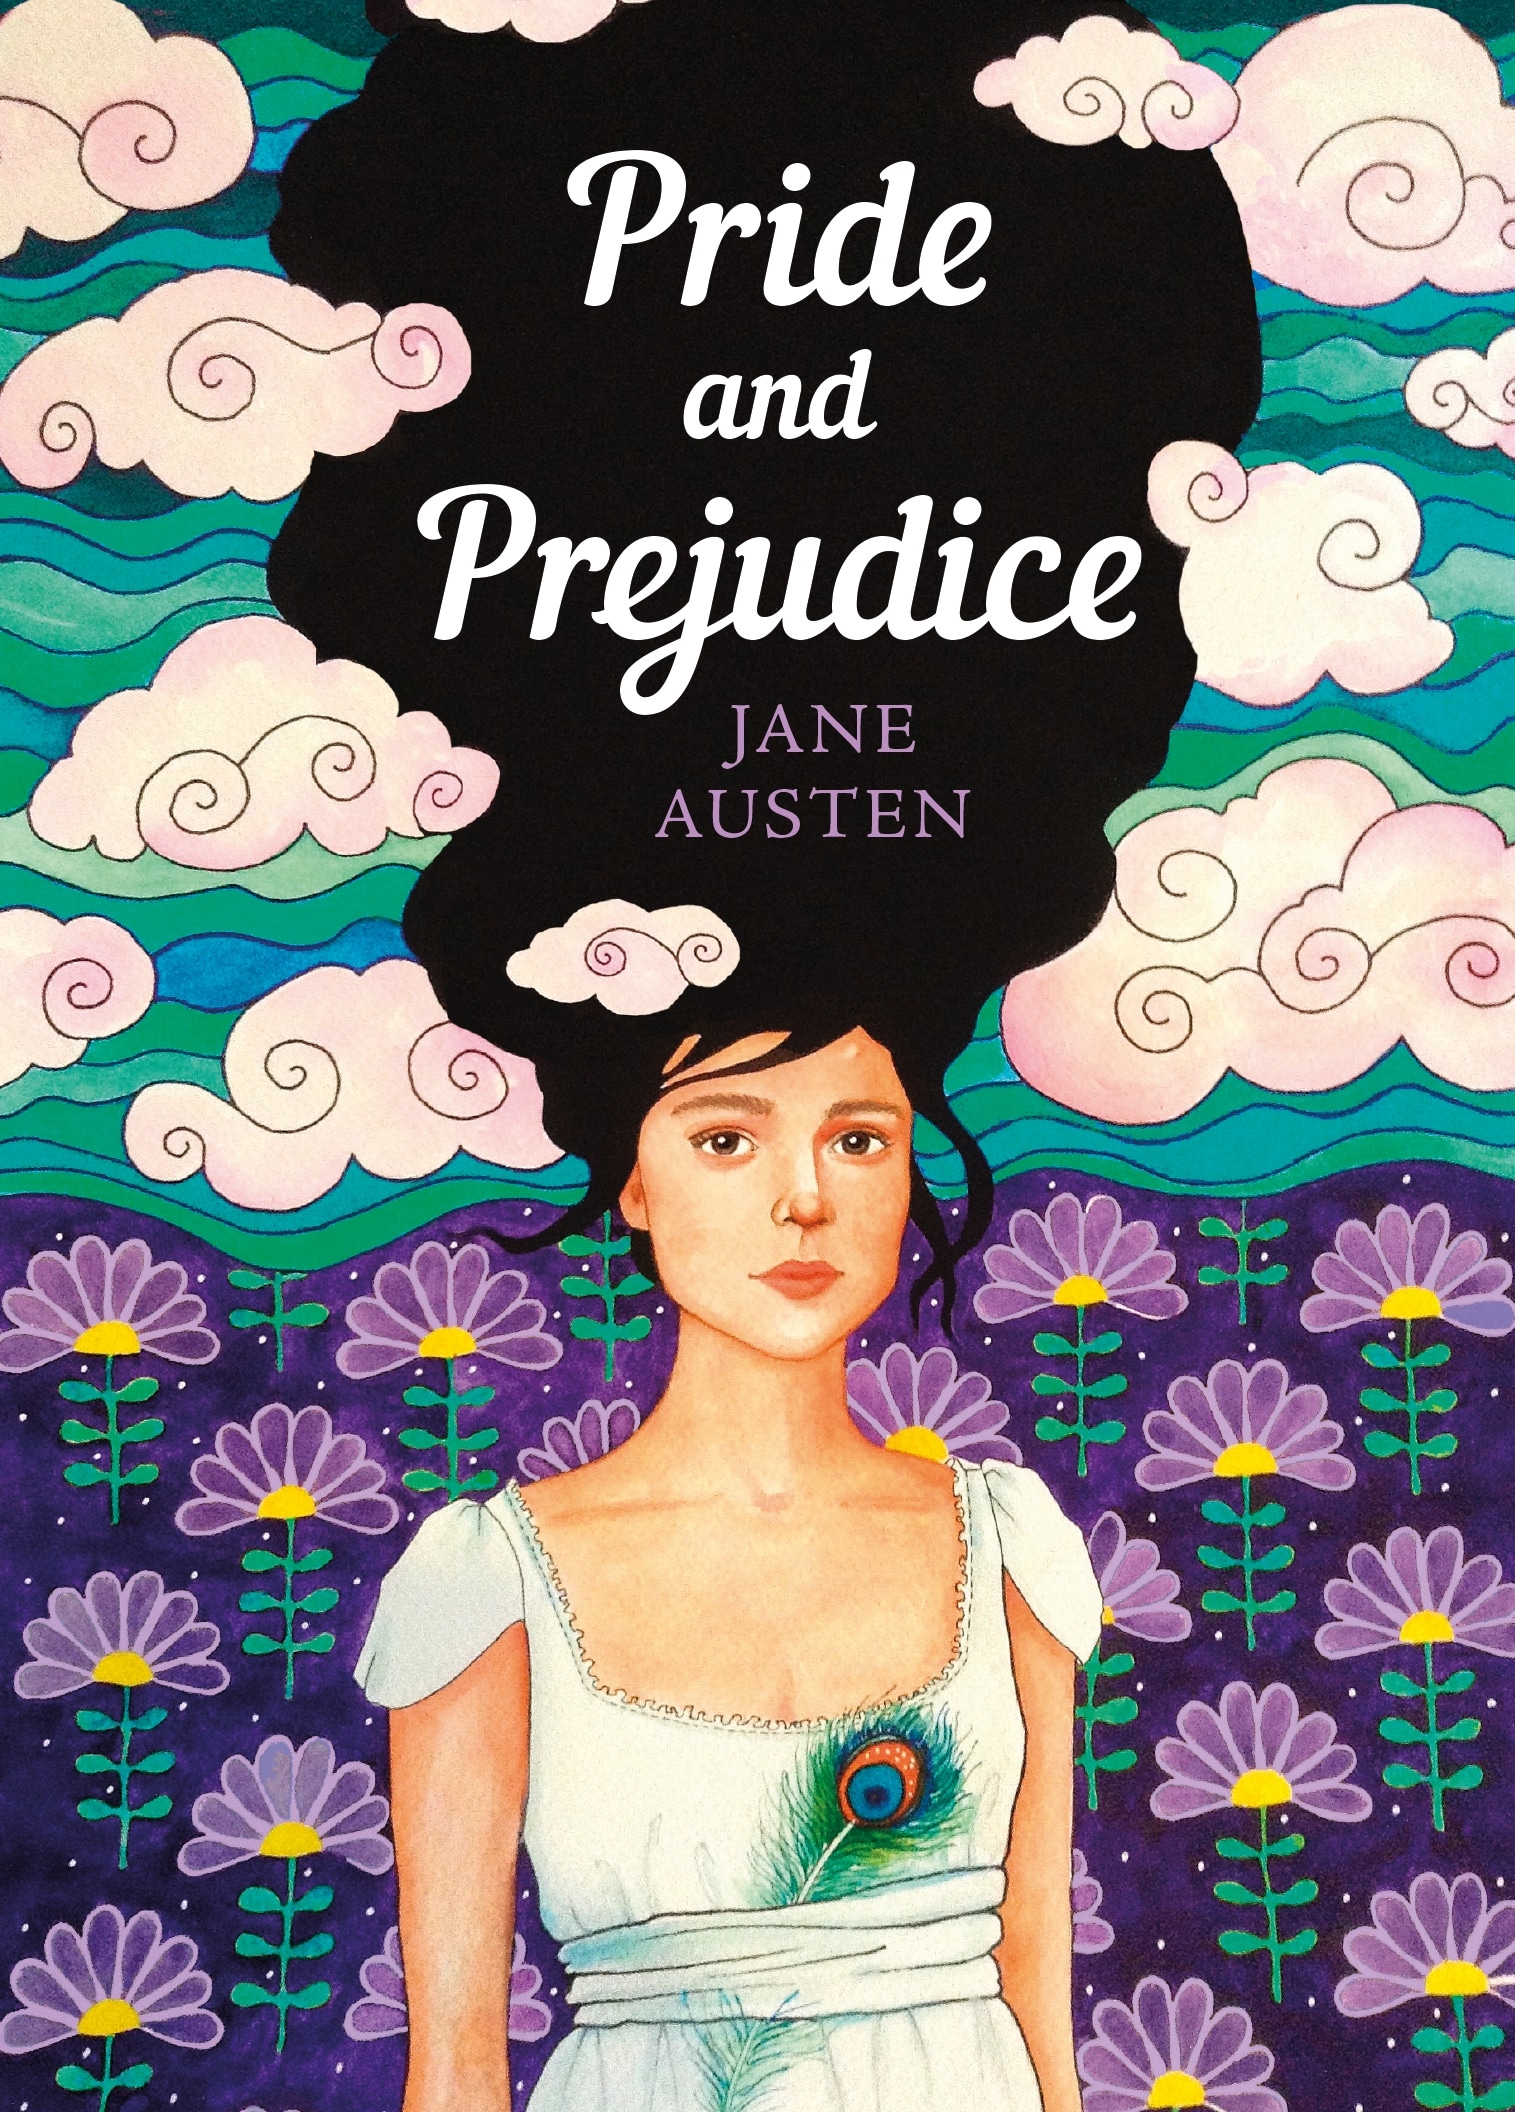 Book “Pride and Prejudice” by Jane Austen — March 7, 2019